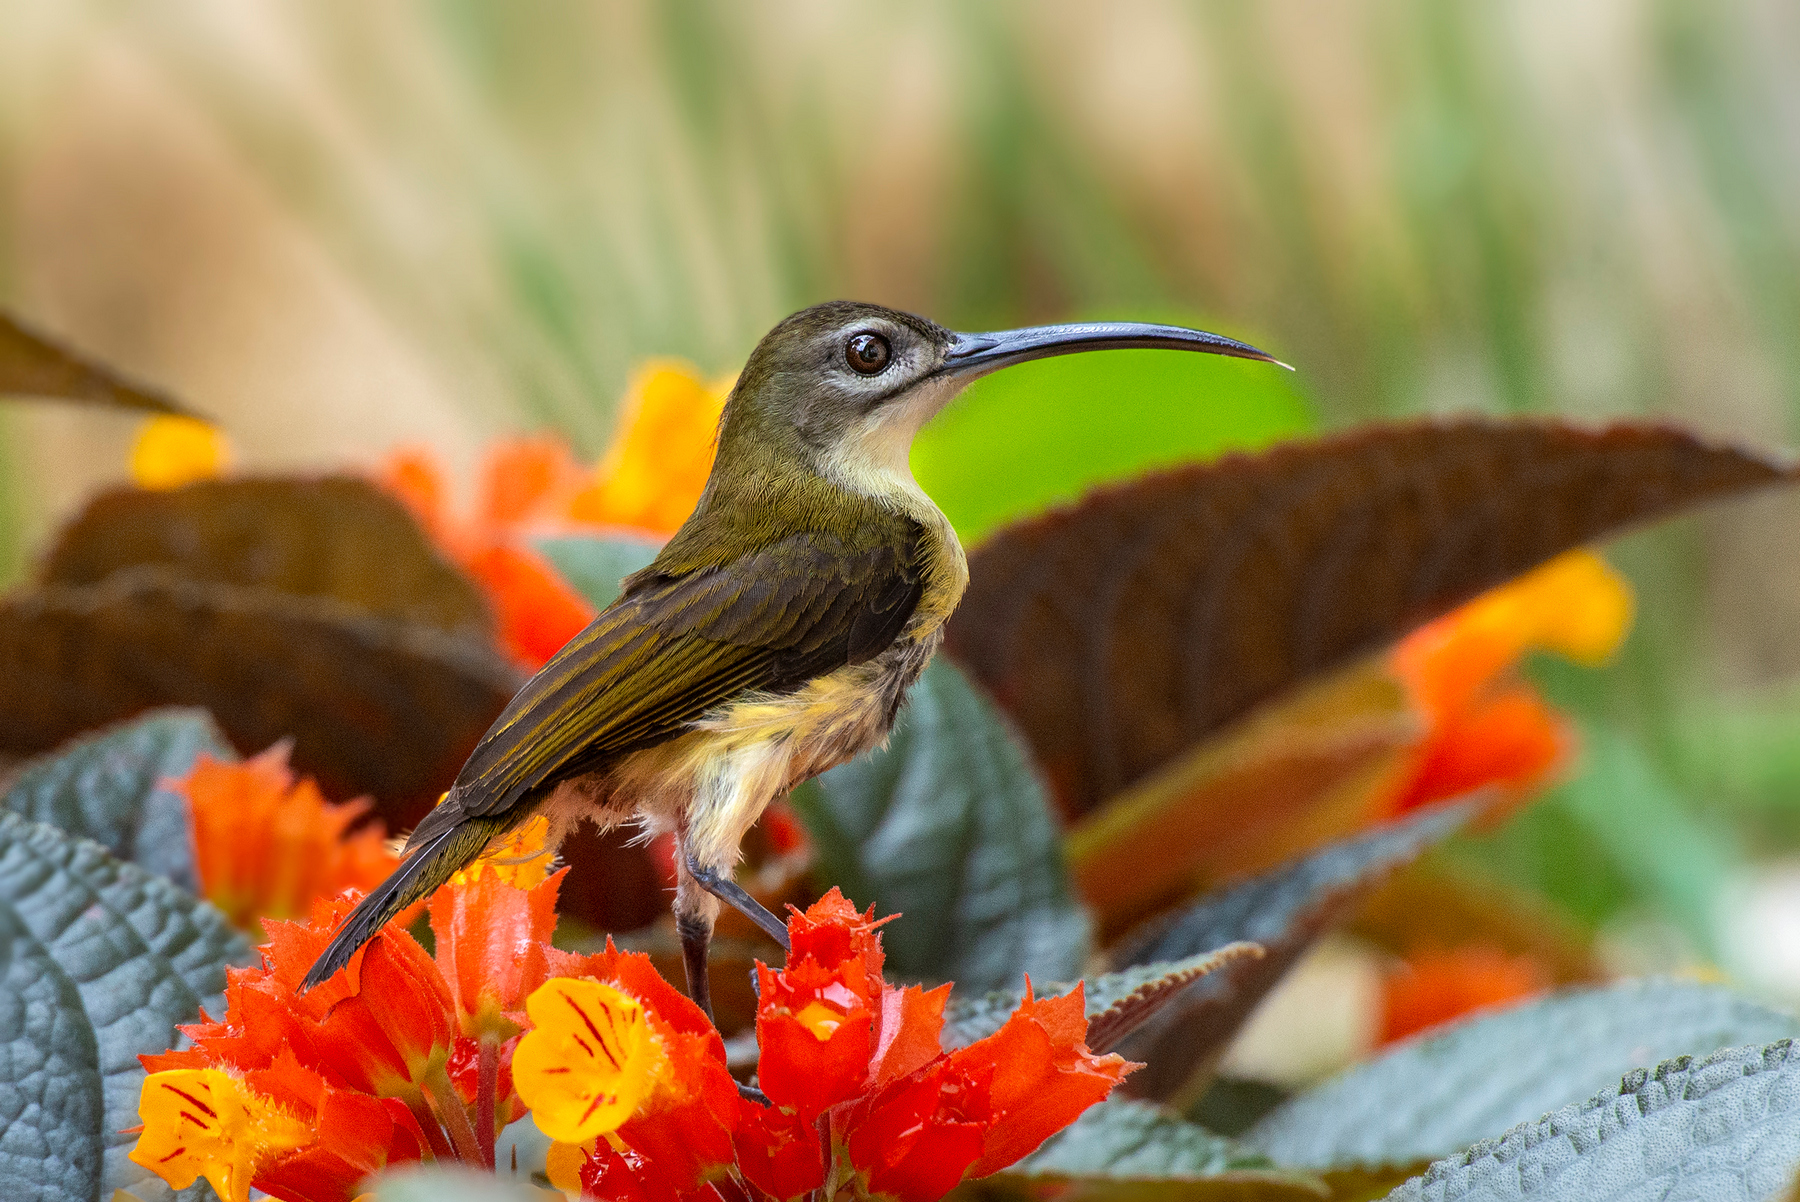 A Beautiful Sunbird